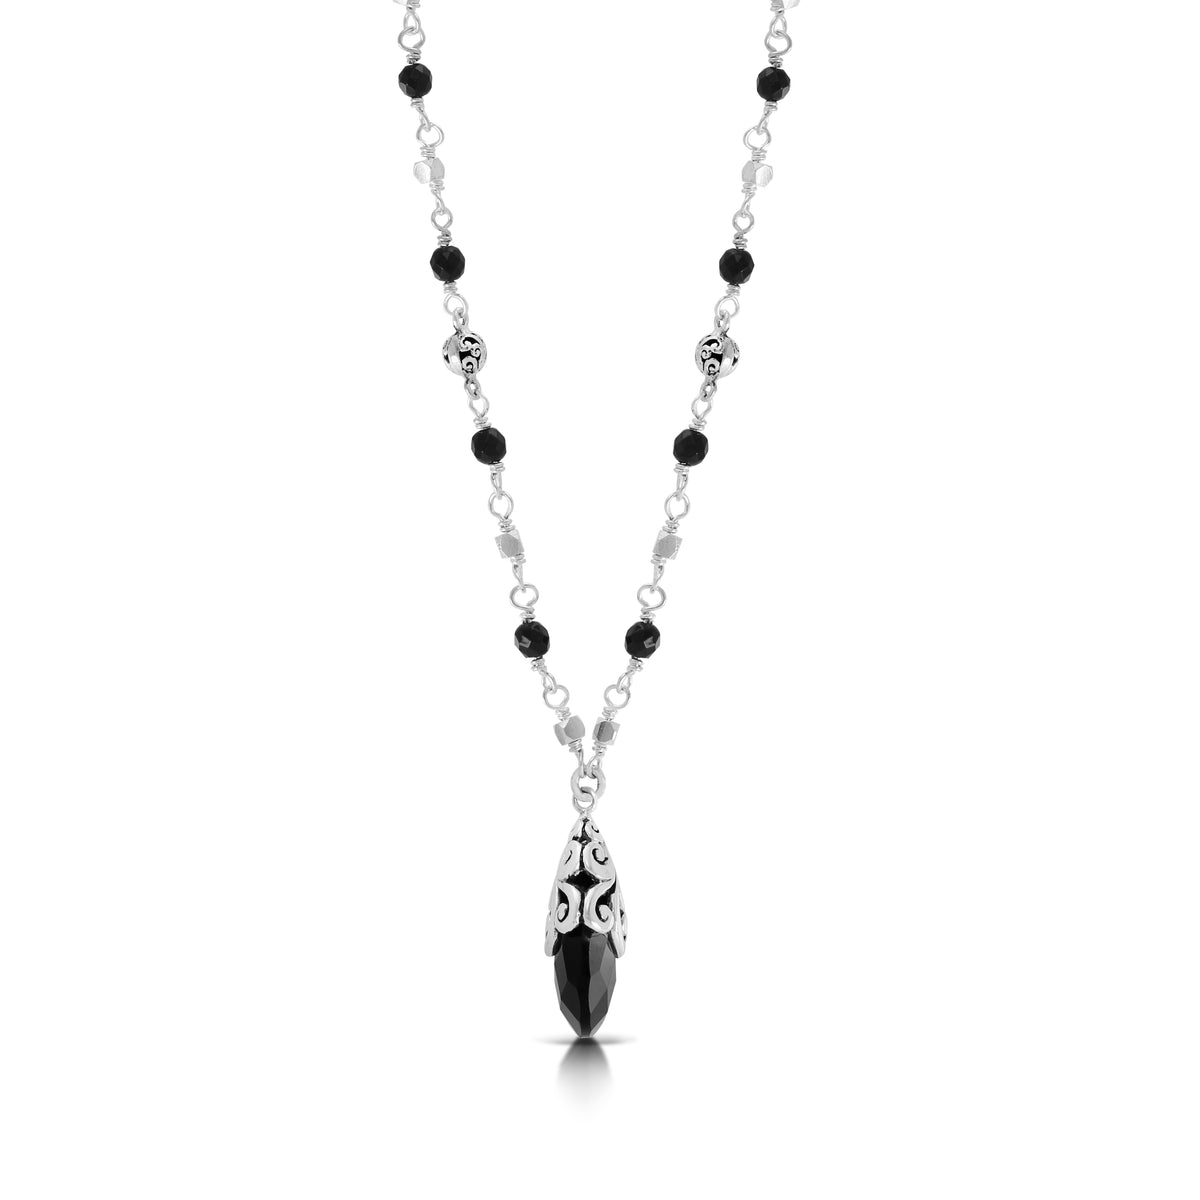 Black Onyx LH Open Scroll Framed Tabiz 15 x 20mm Pendant in Single Strand Wire Wrapped Necklace (17 - 20")